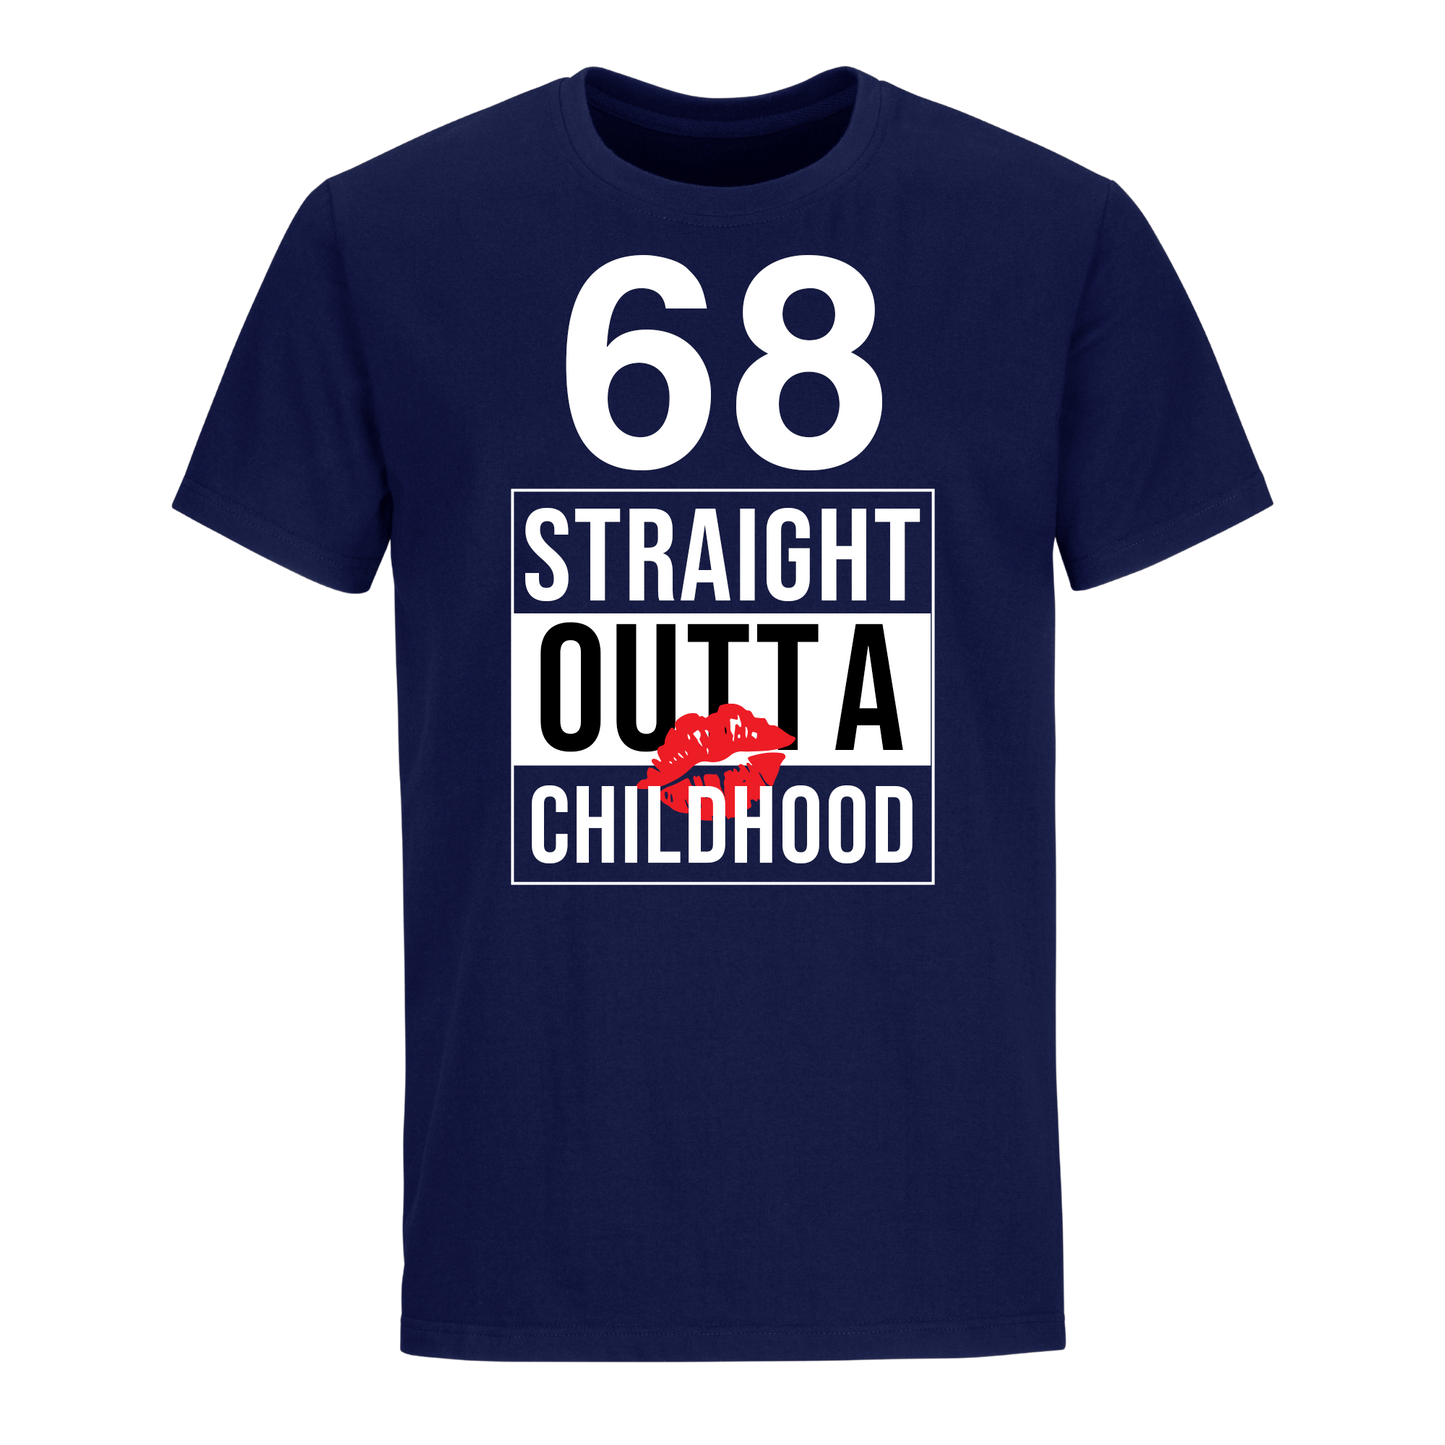 68 STRAIGHT OUTTA CHILDHOOD UNISEX SHIRT